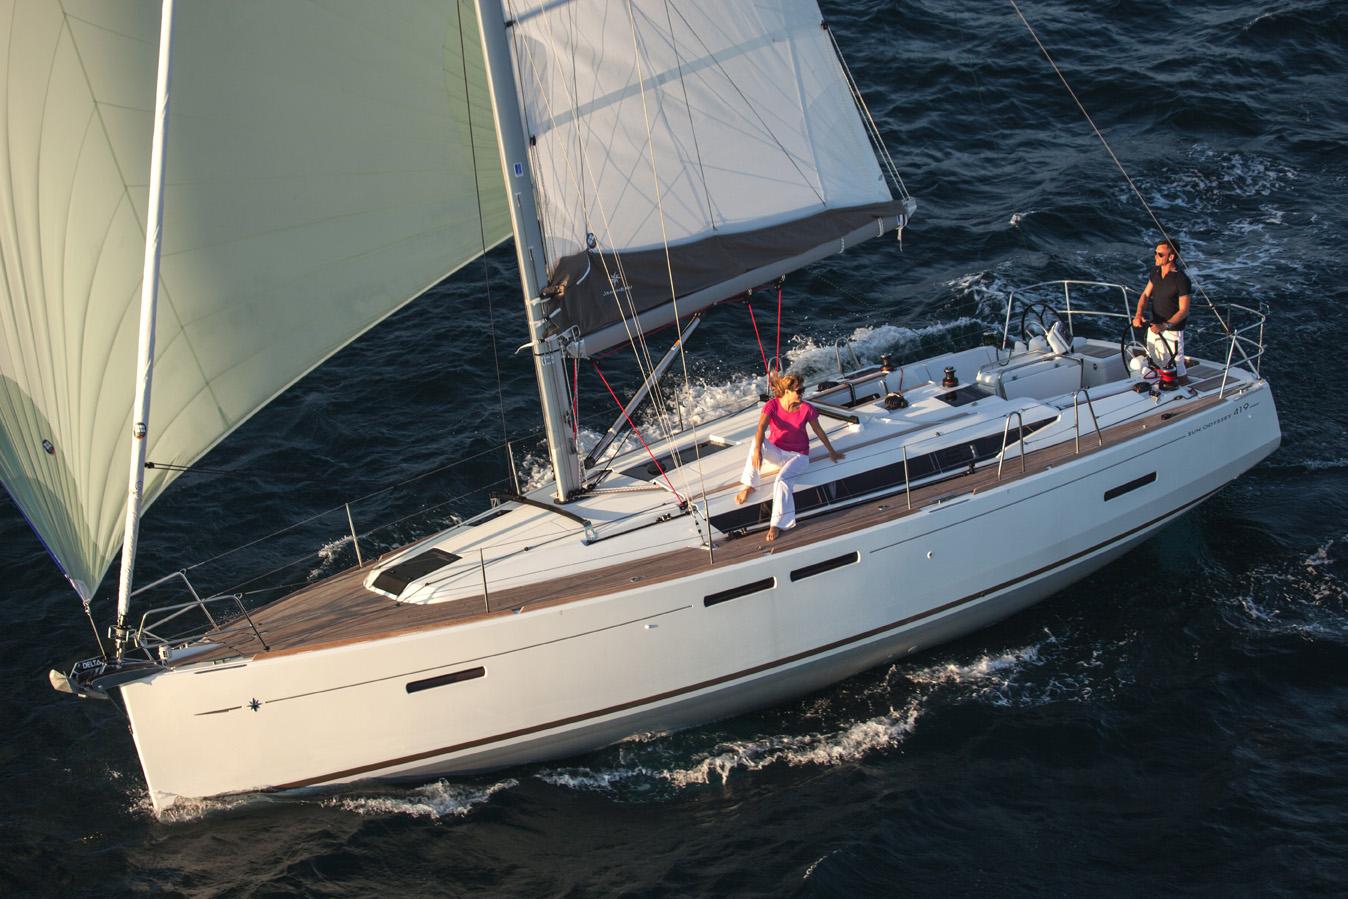 Sail boat FOR CHARTER, year 2017 brand Jeanneau and model SUN ODYSSEY 419, available in Marina Santa Cruz de Tenerife Santa Cruz de Tenerife Tenerife España